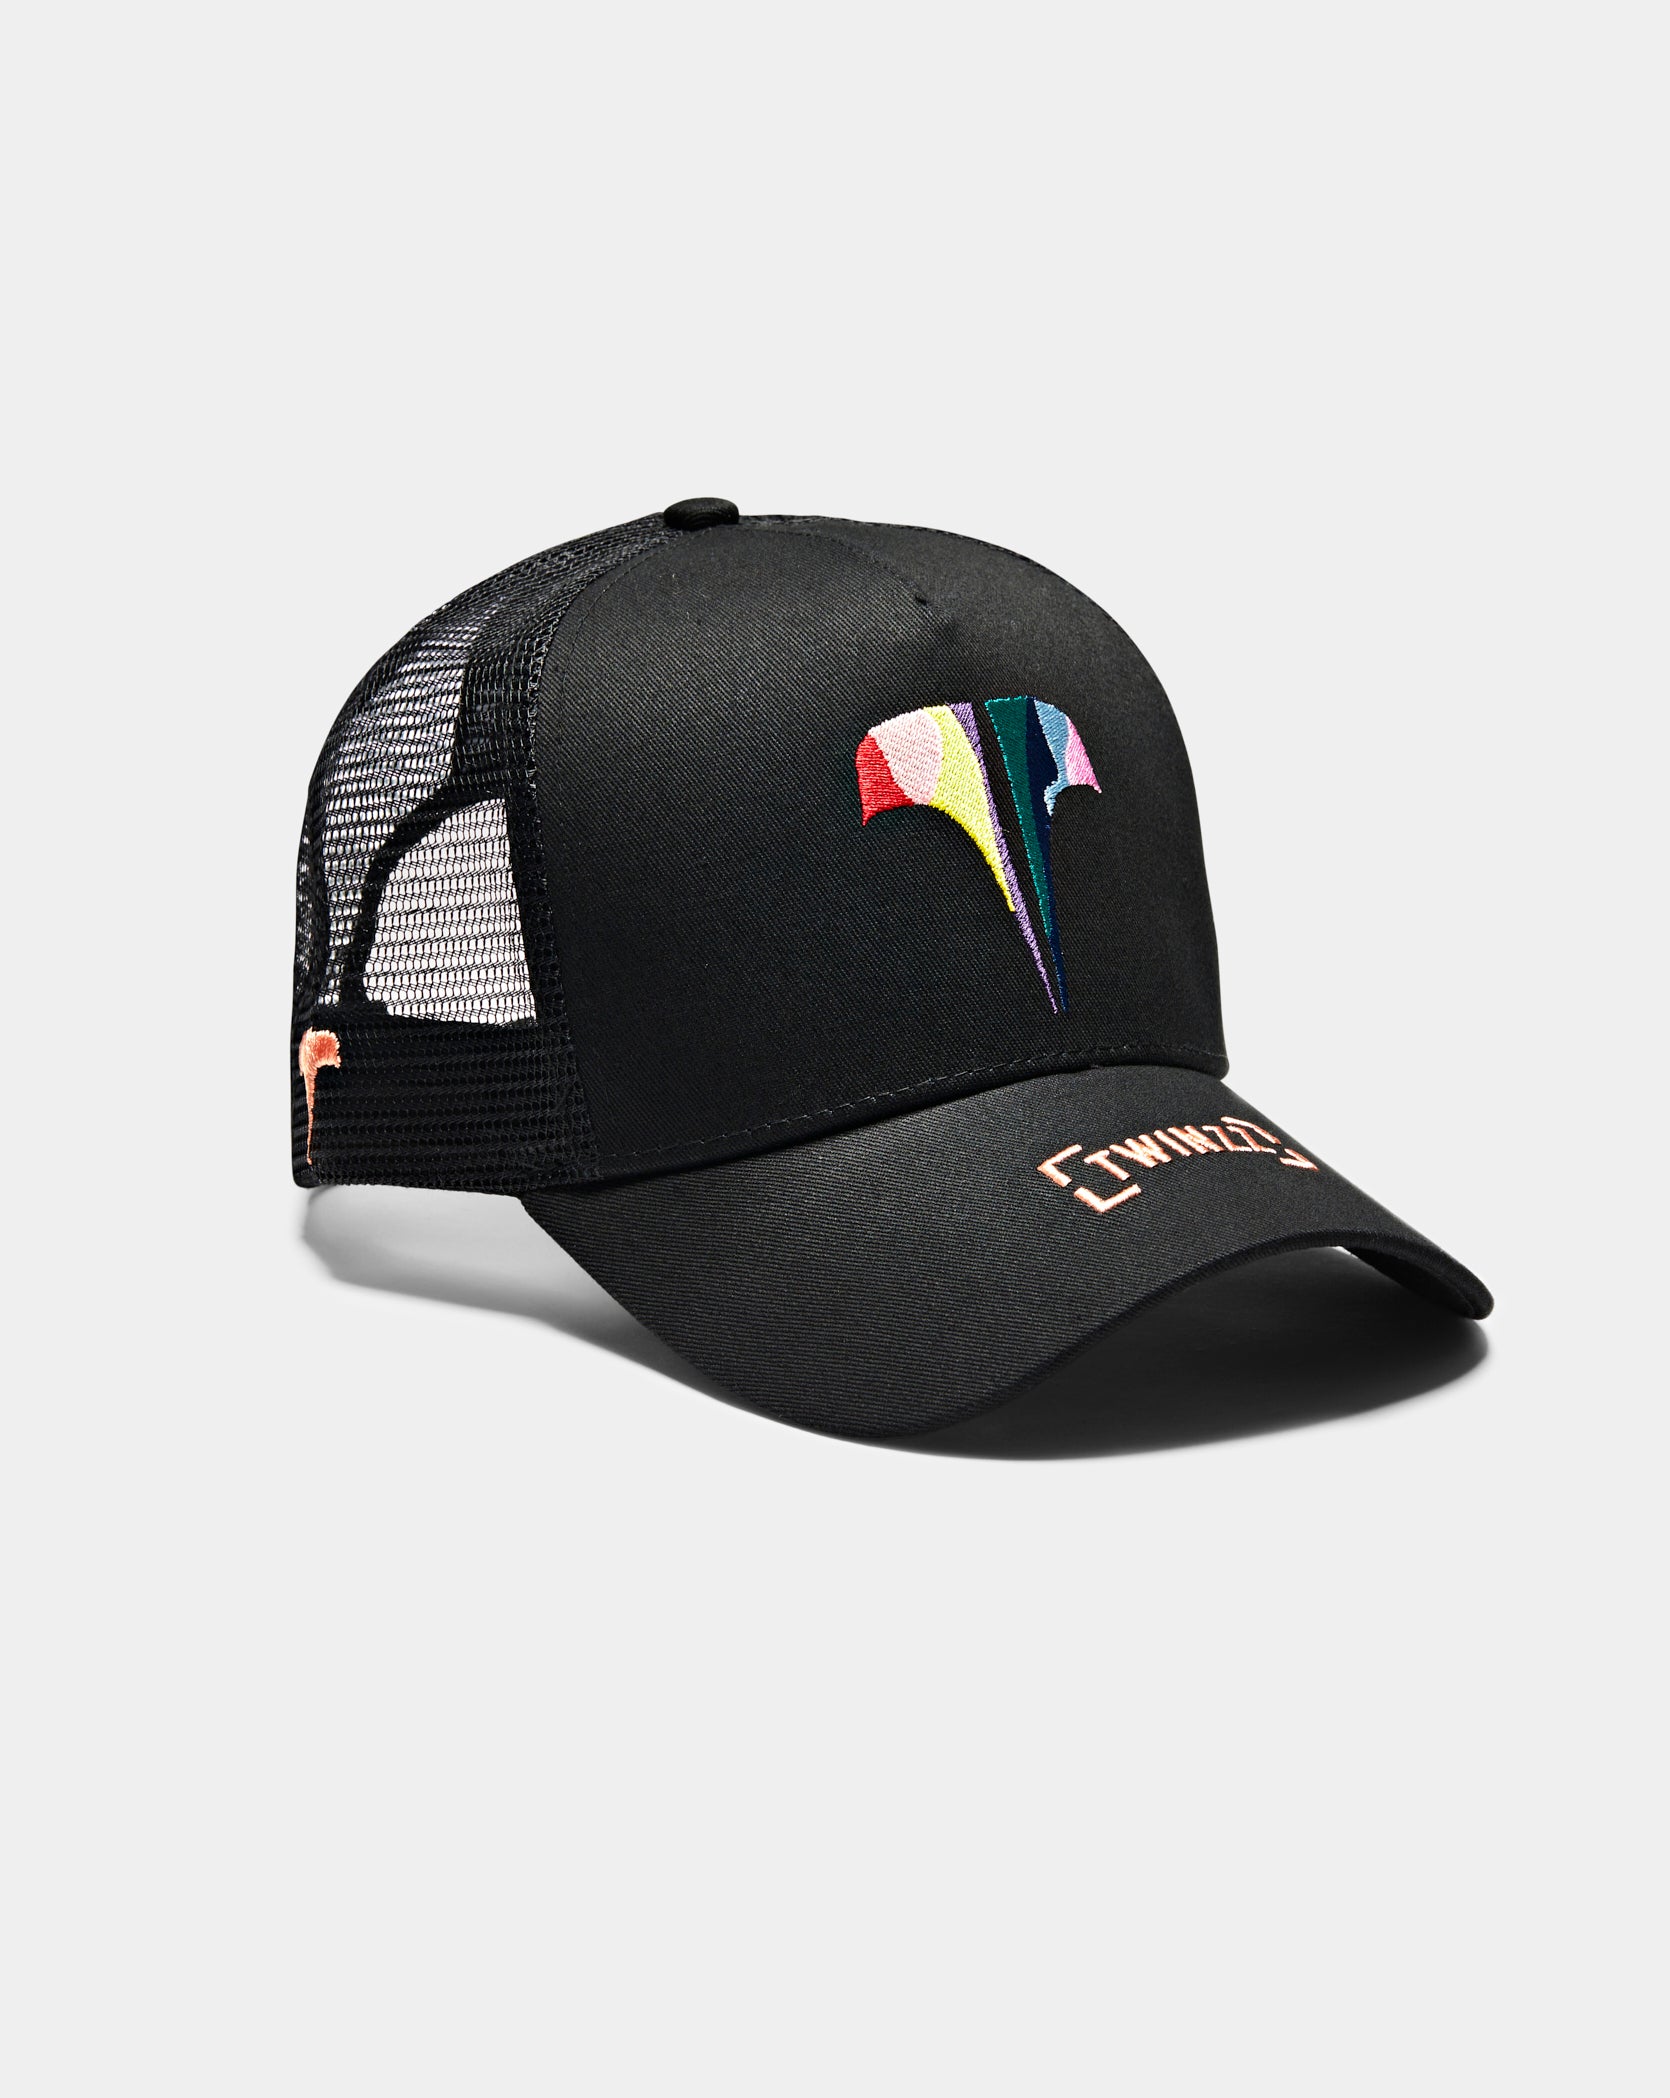 Twinzz black trucker hat with multicoloured logo